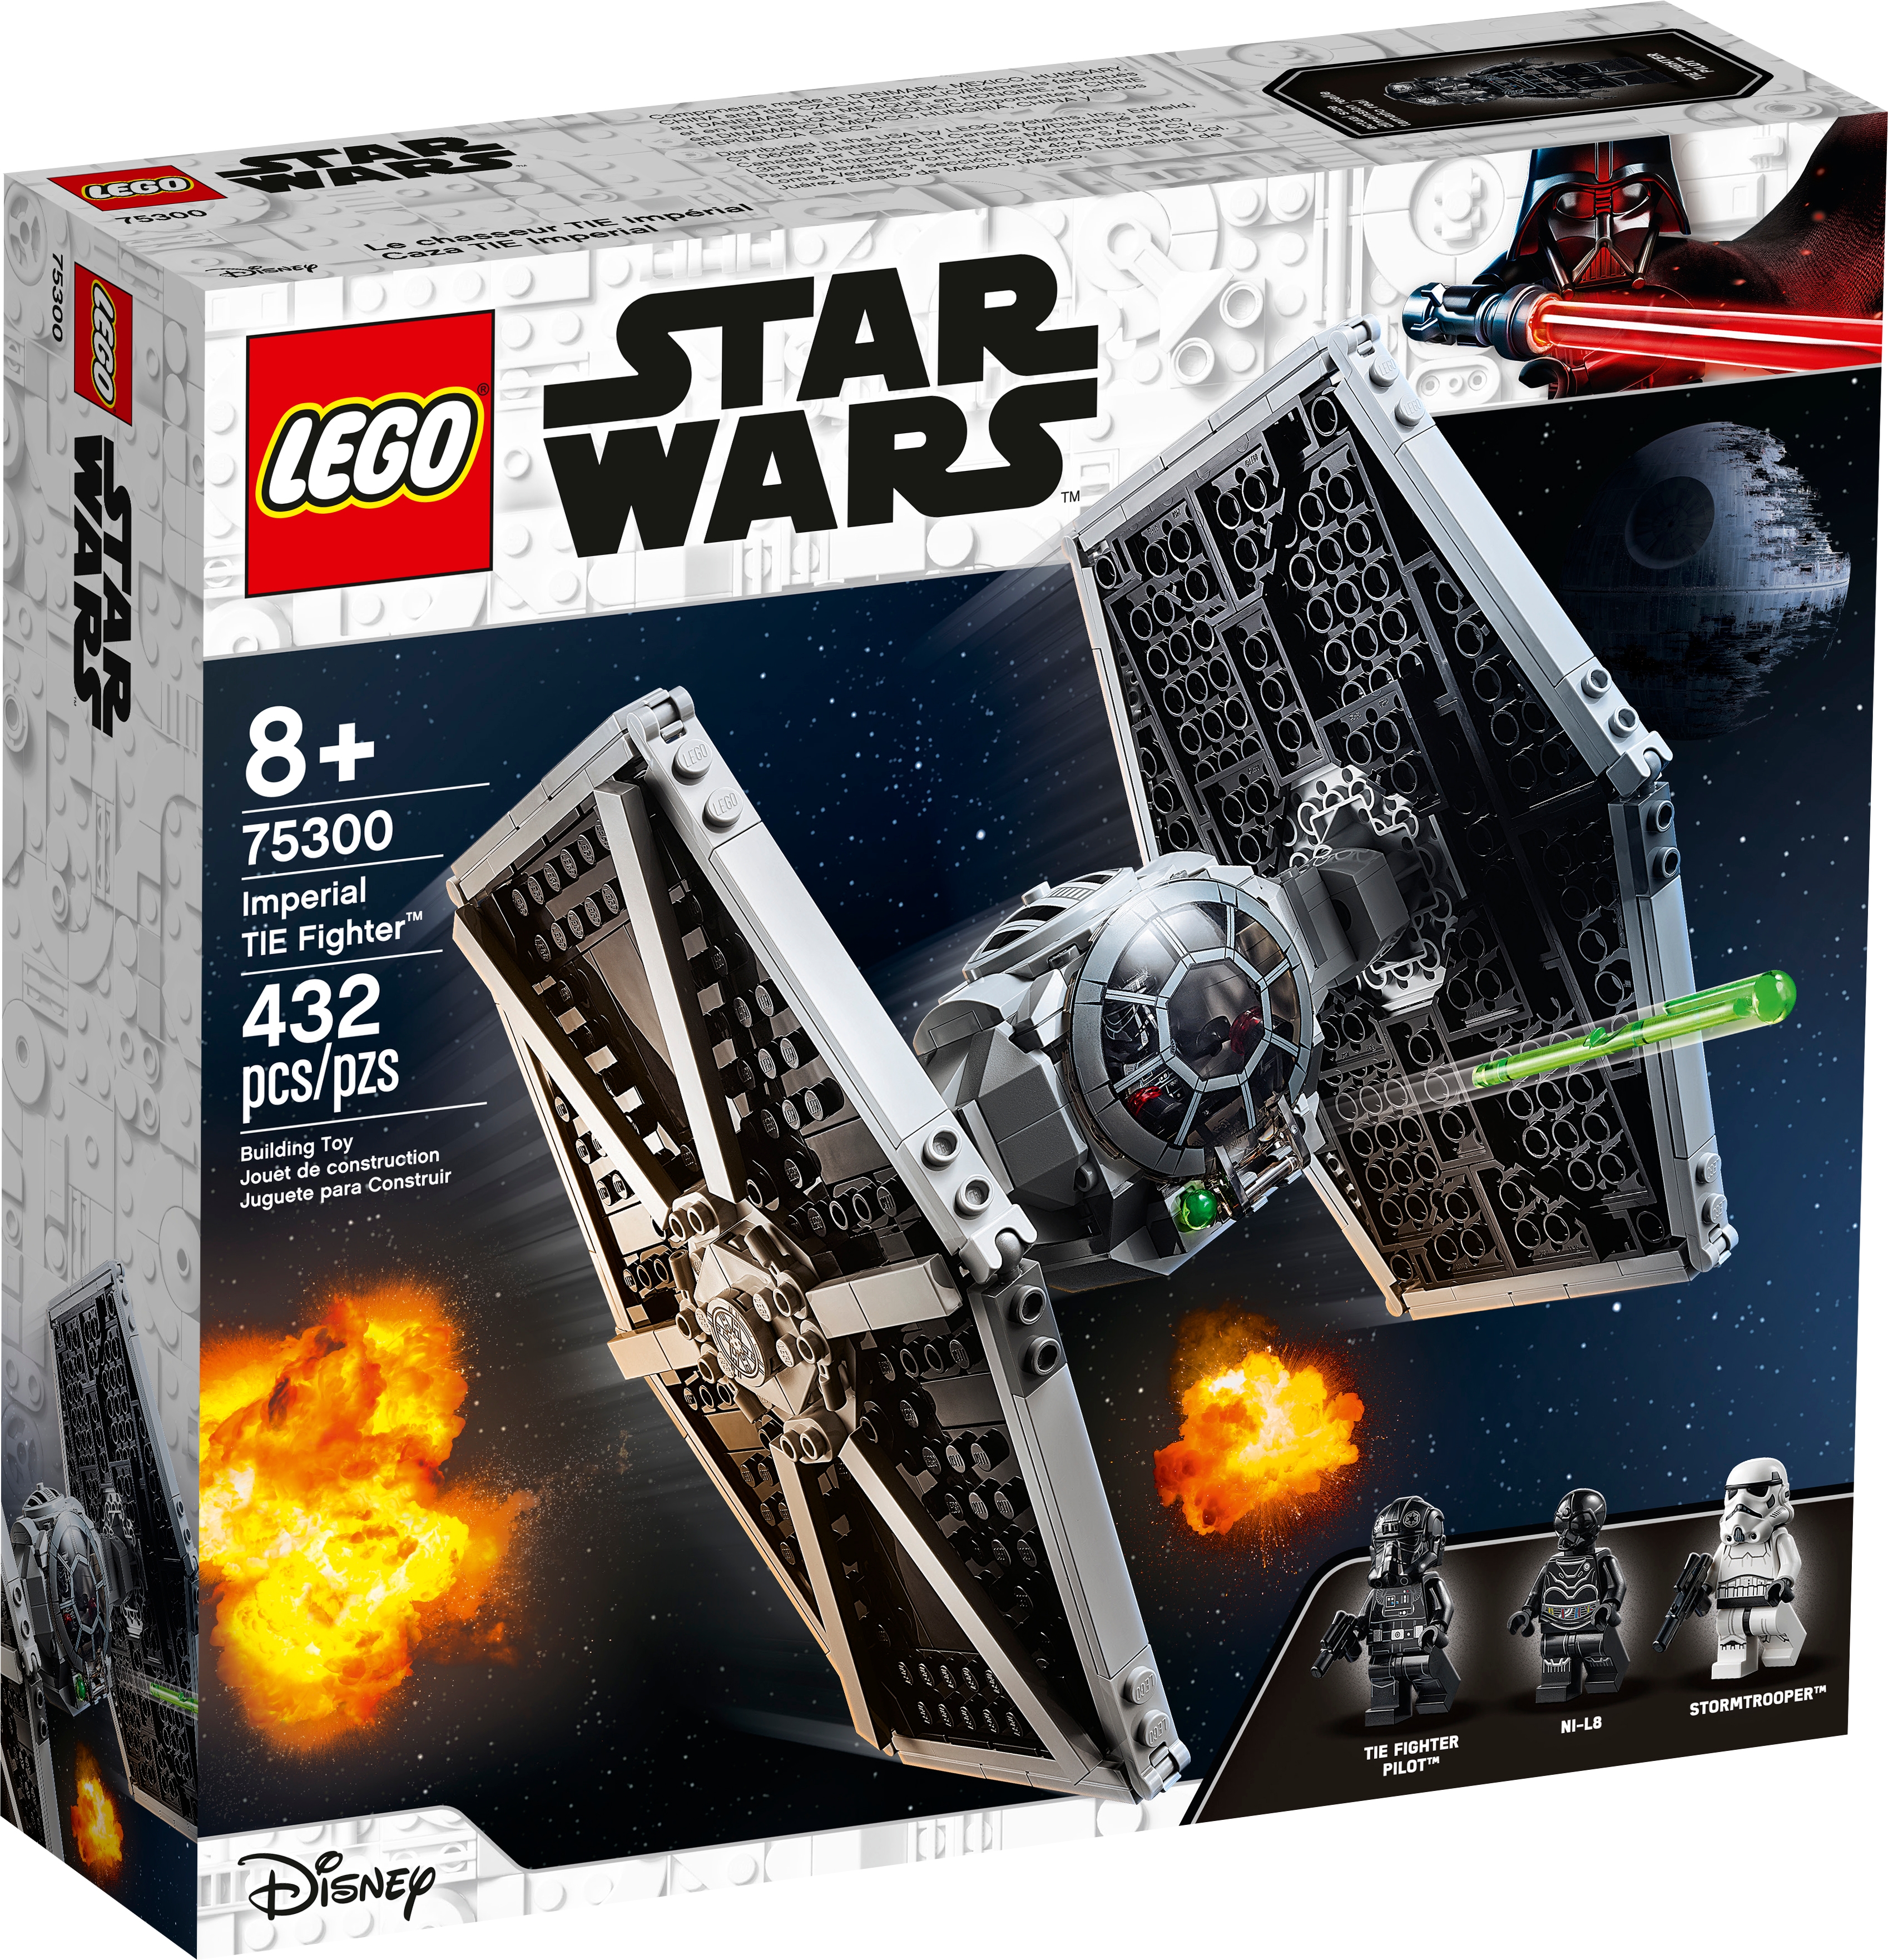 embalaje original Lego ® Star Wars 75300 imperial tie figther-nuevo 